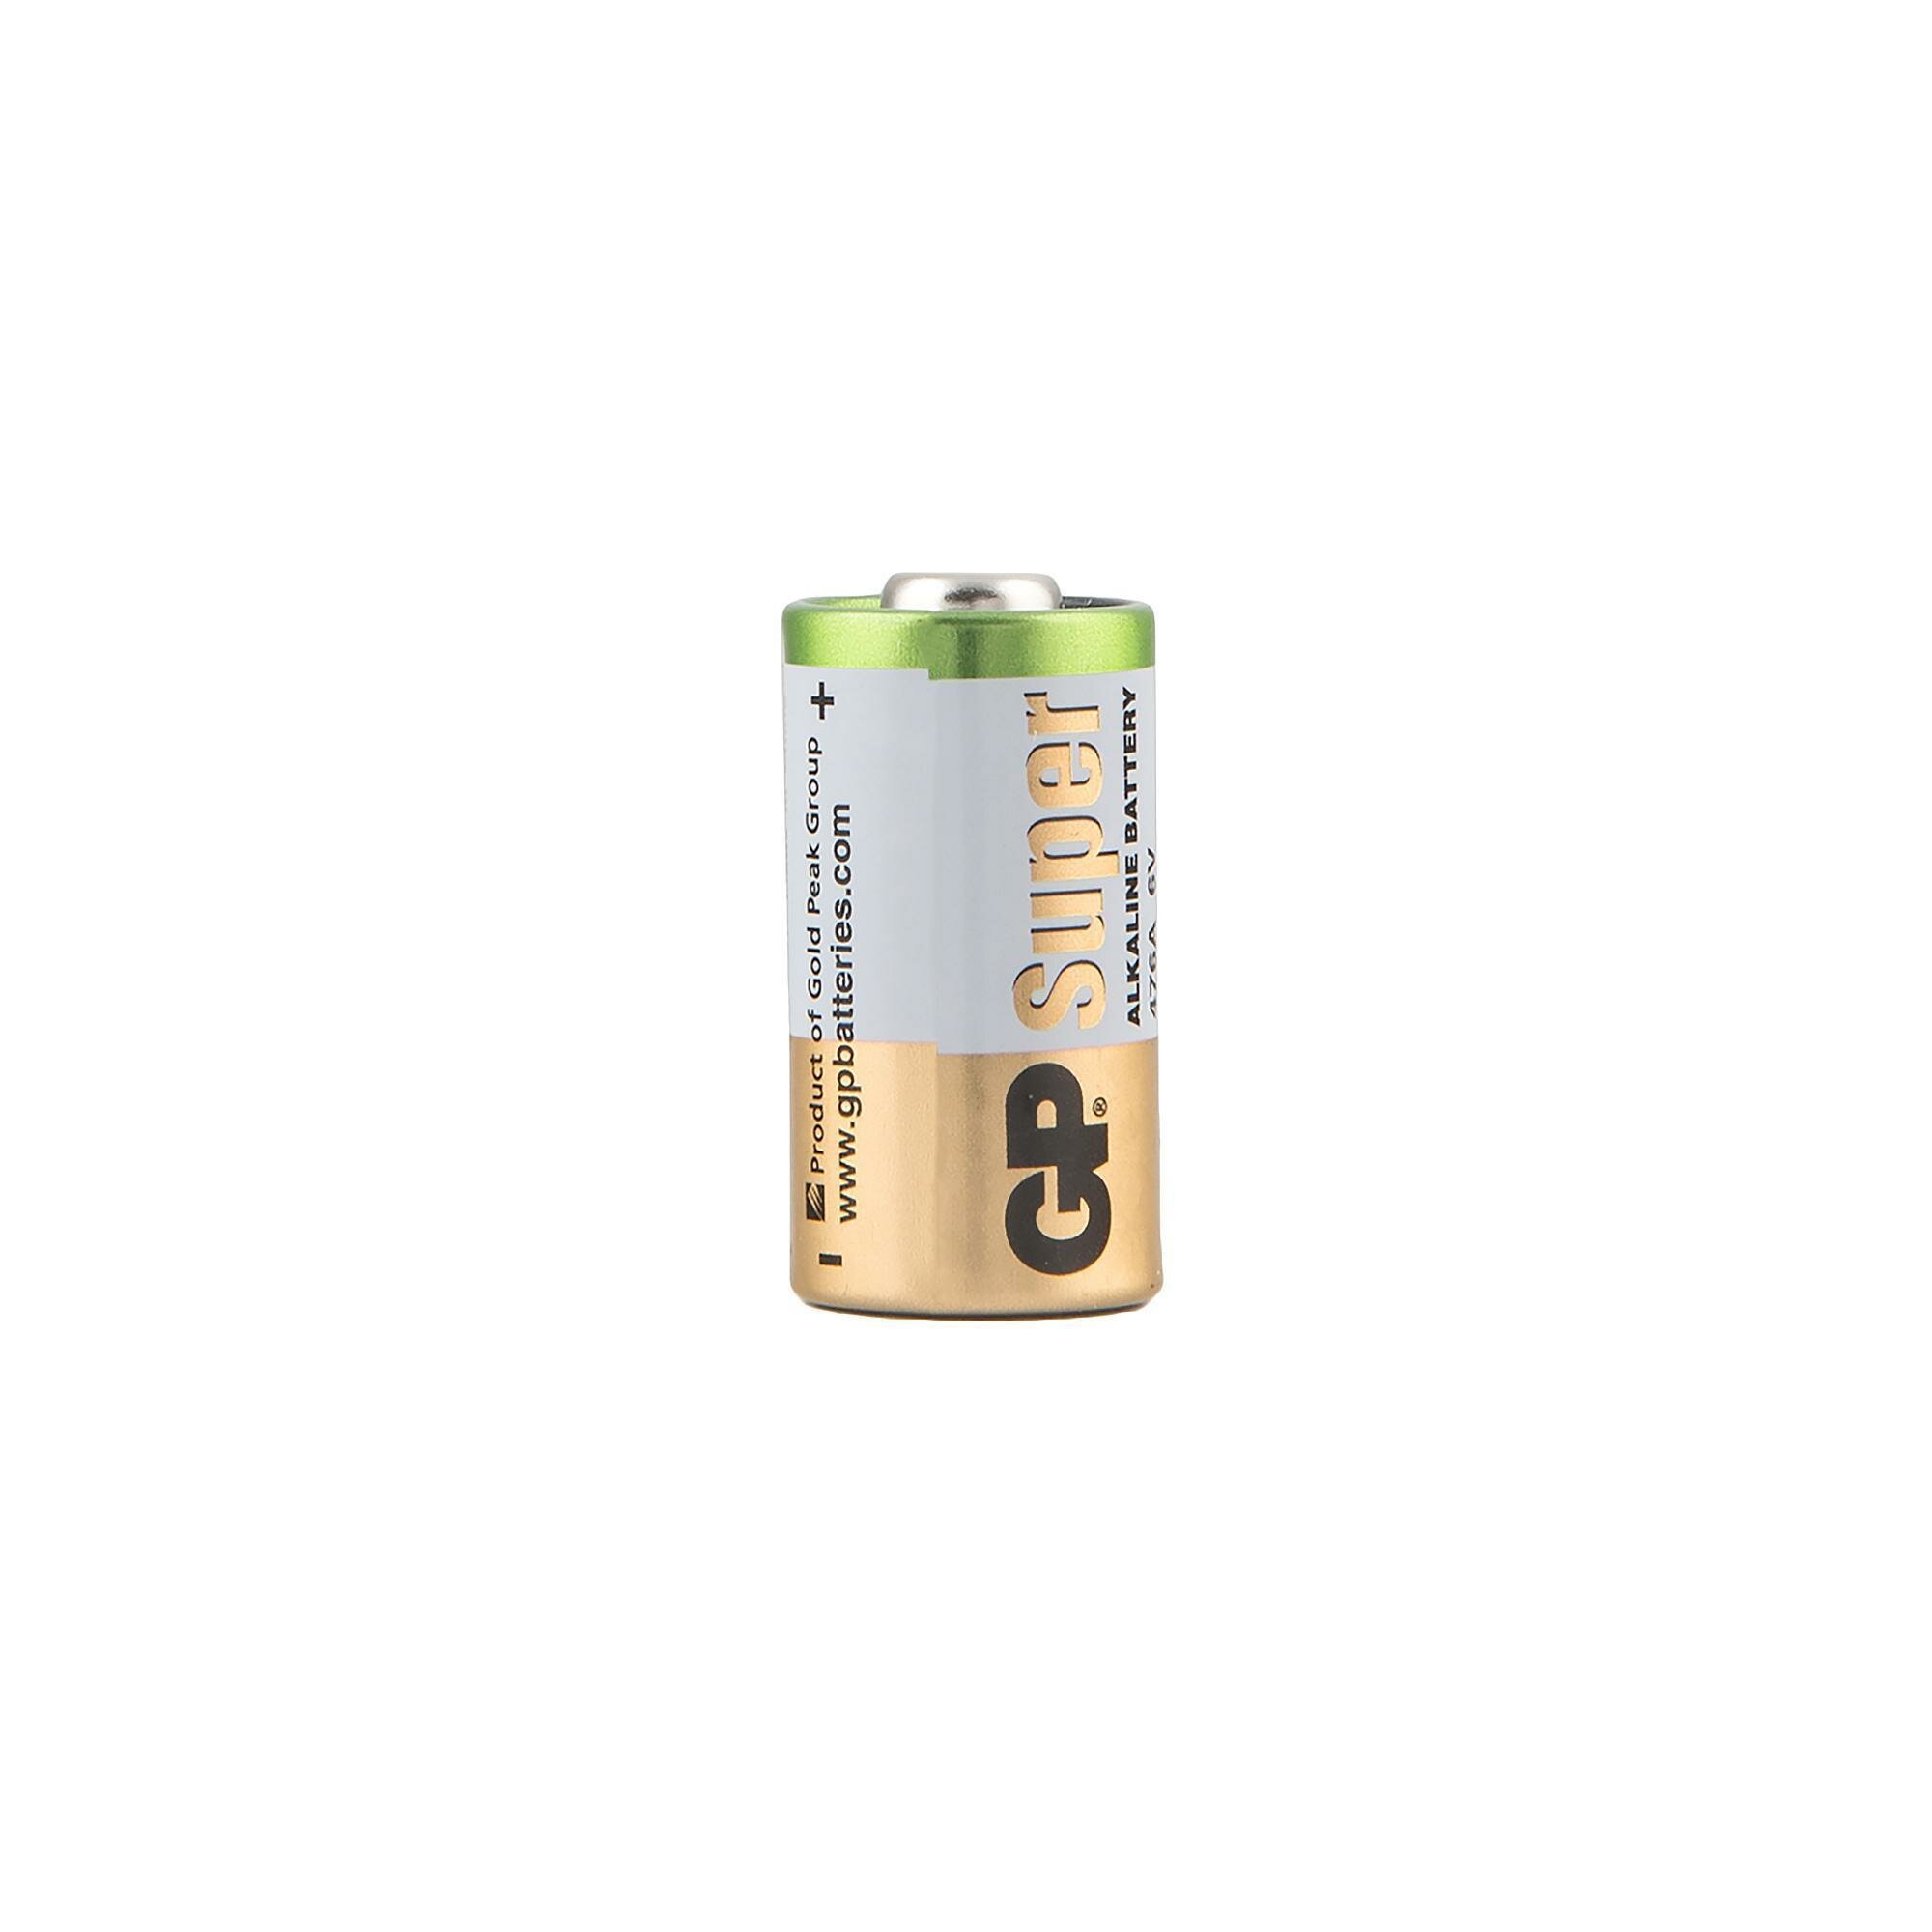 Батарейка GP 4LR44/476/28A High Voltage 476A-C1 BL1